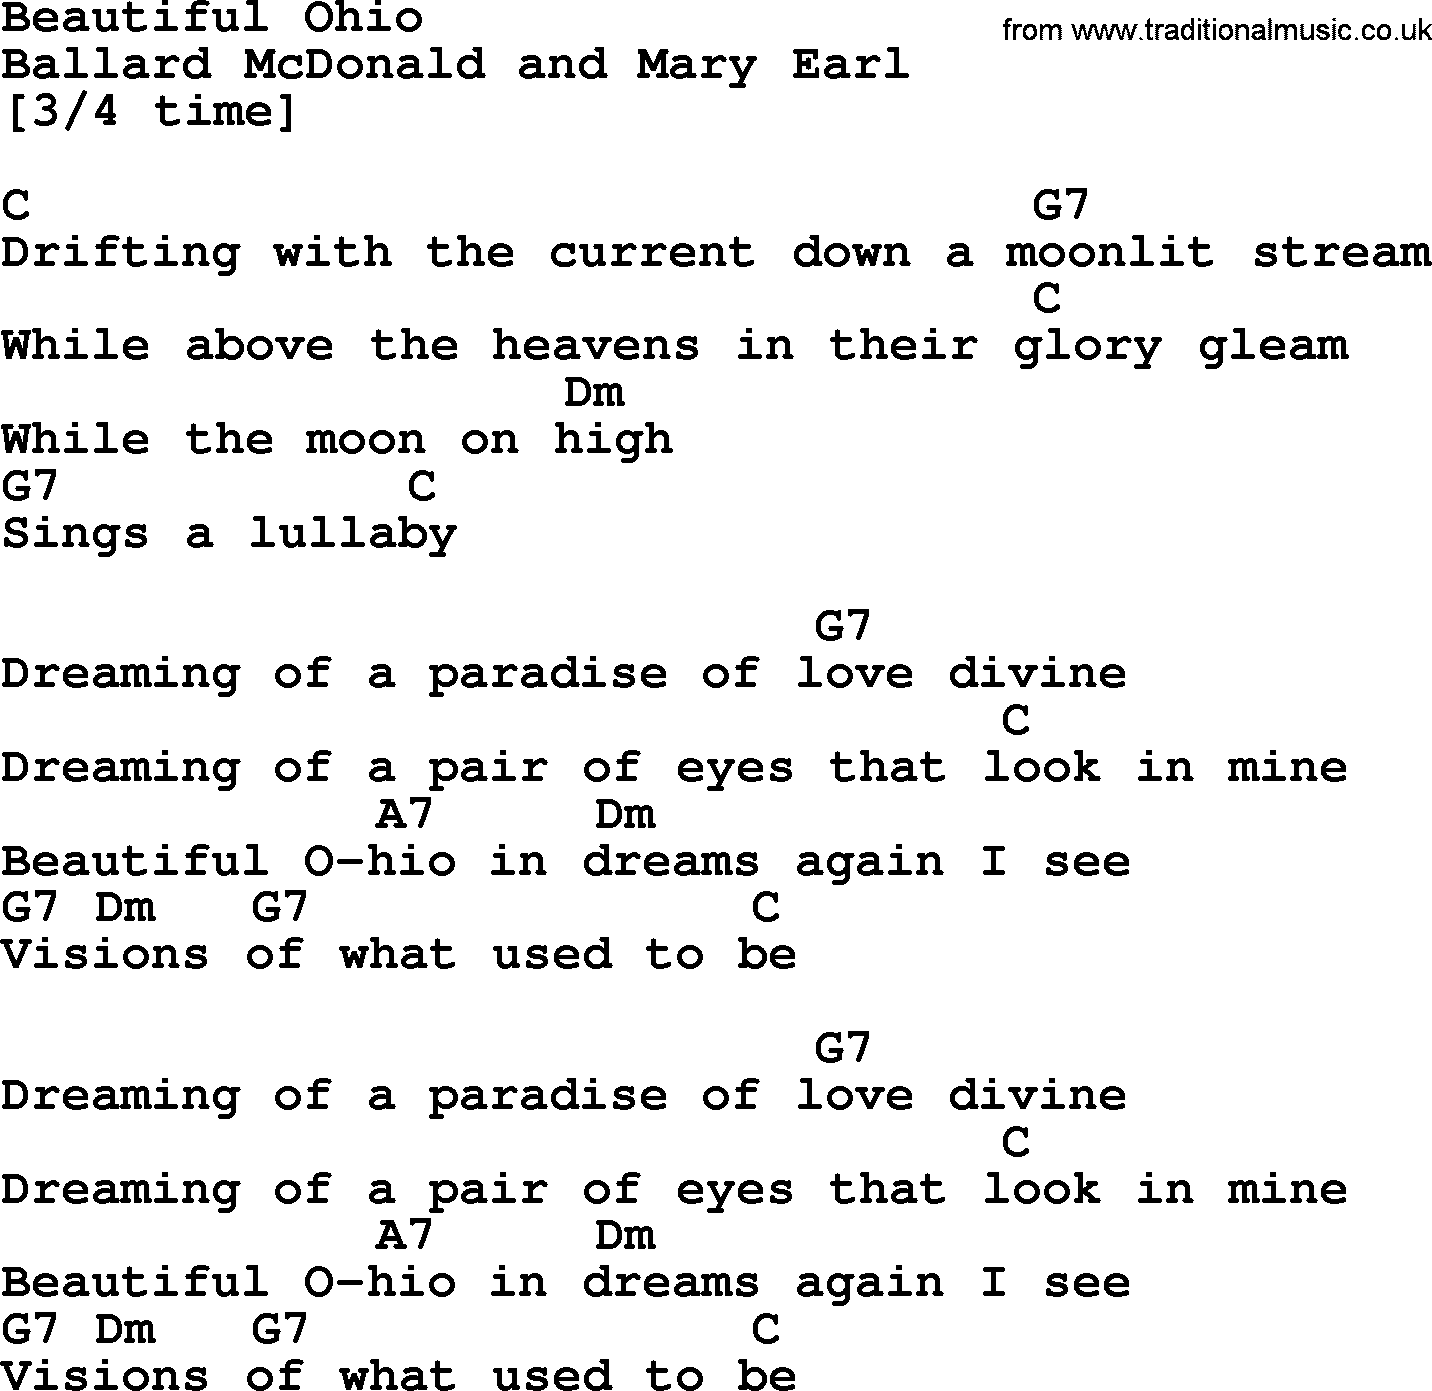 Marty Robbins song: Beautiful Ohio, lyrics and chords